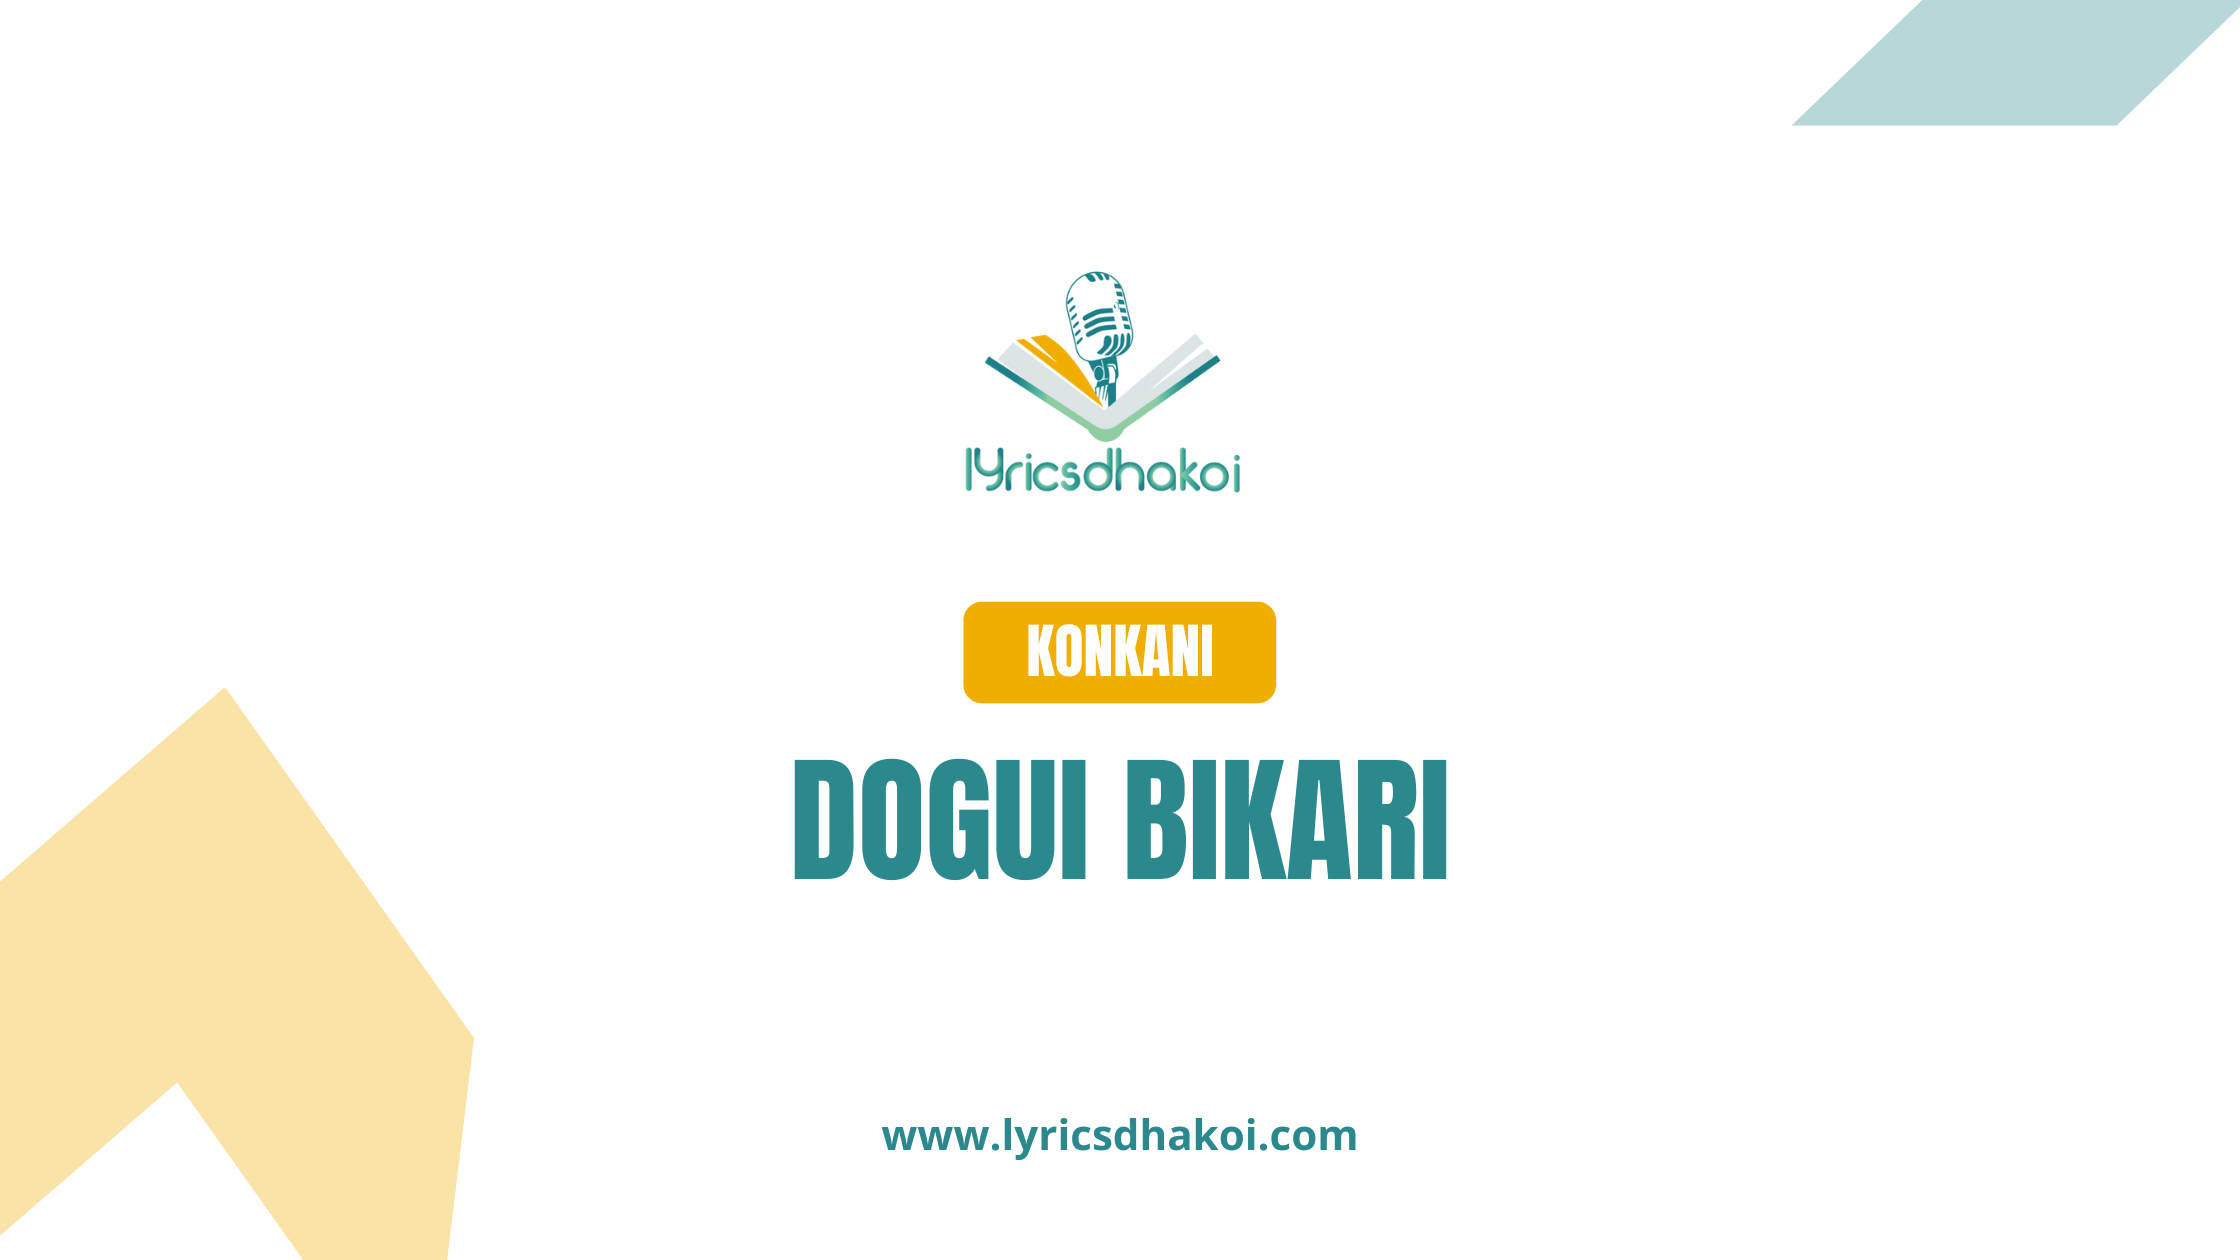 Dogui Bikari Konkani Lyrics for Karaoke Online - LyricsDhakoi.com